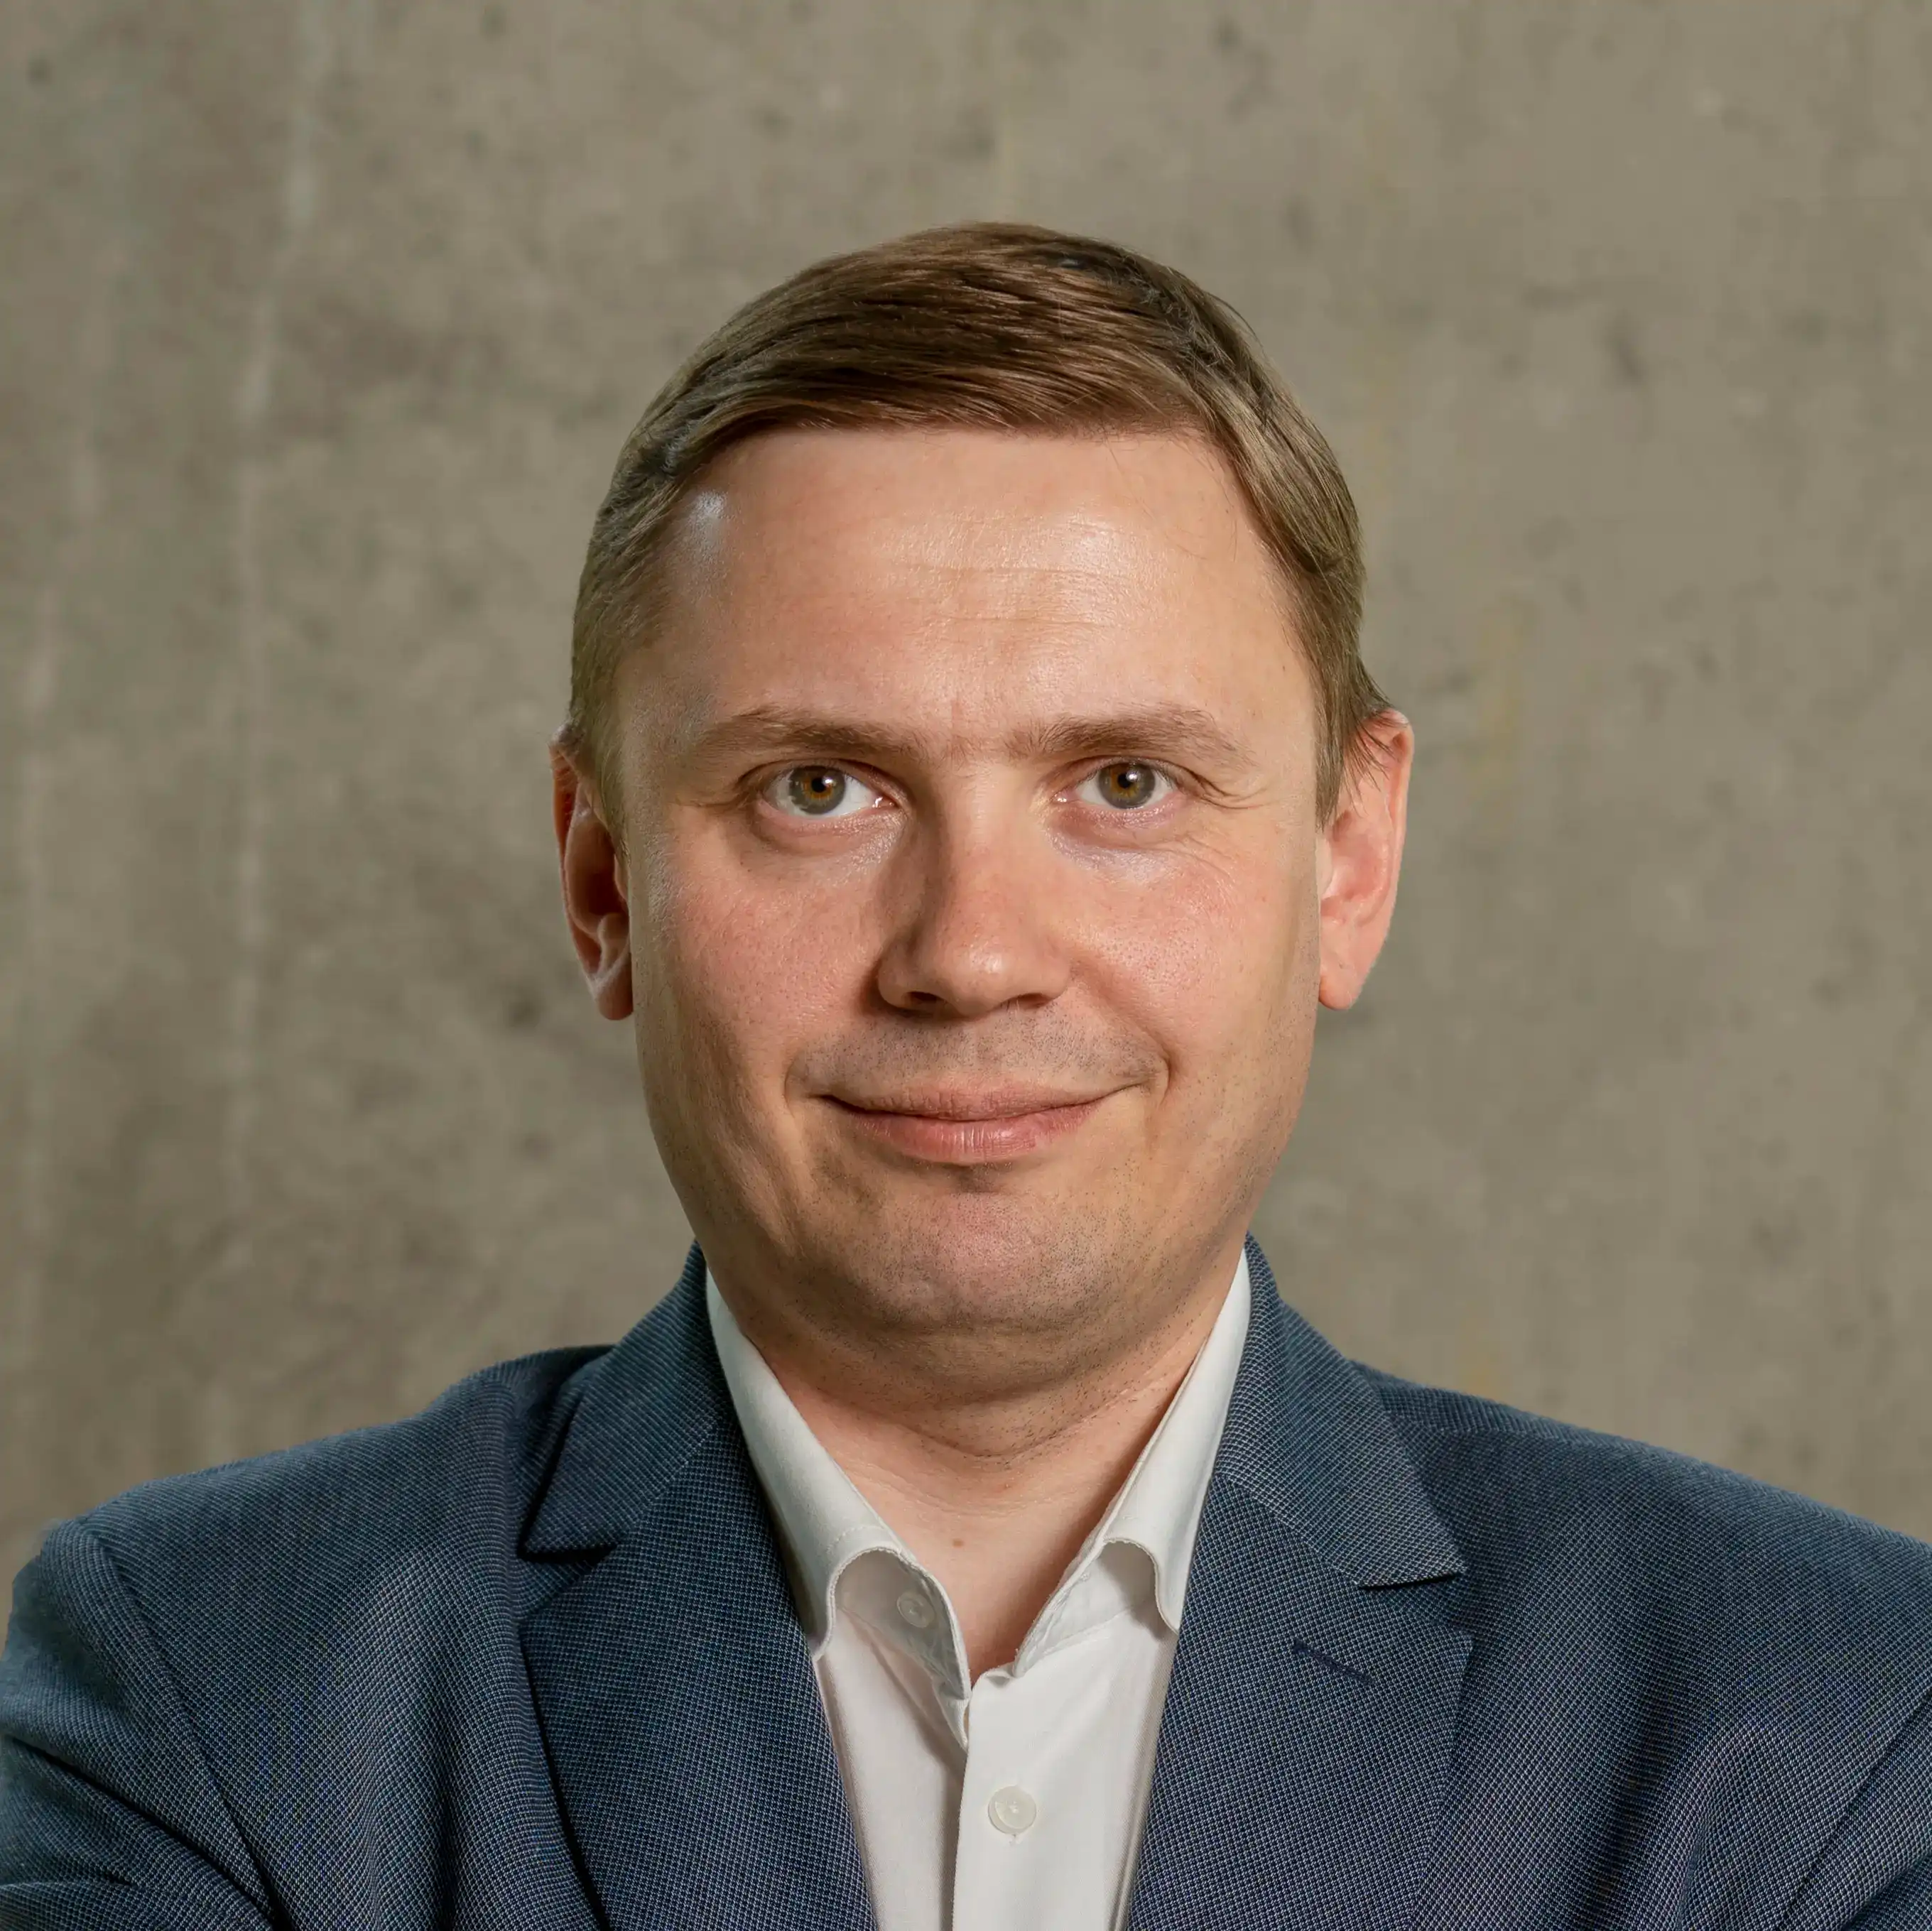 Paweł Żebrowski - Modino Business Development Manager profile image